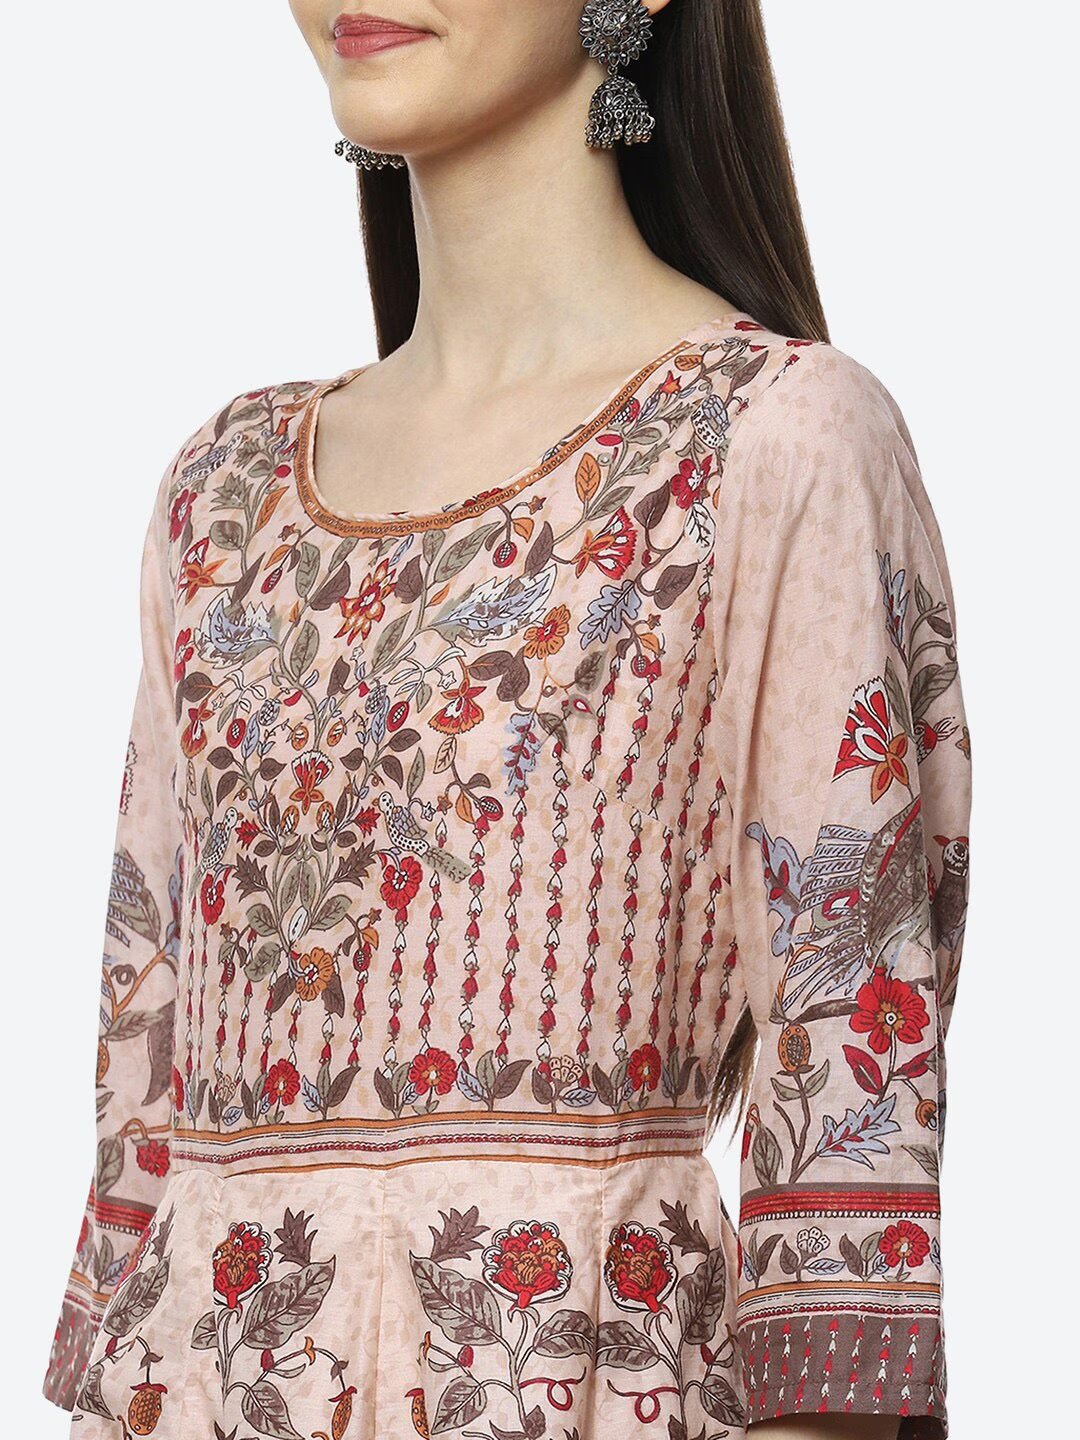 Women Beige Floral Printed Panelled Salwar Suit